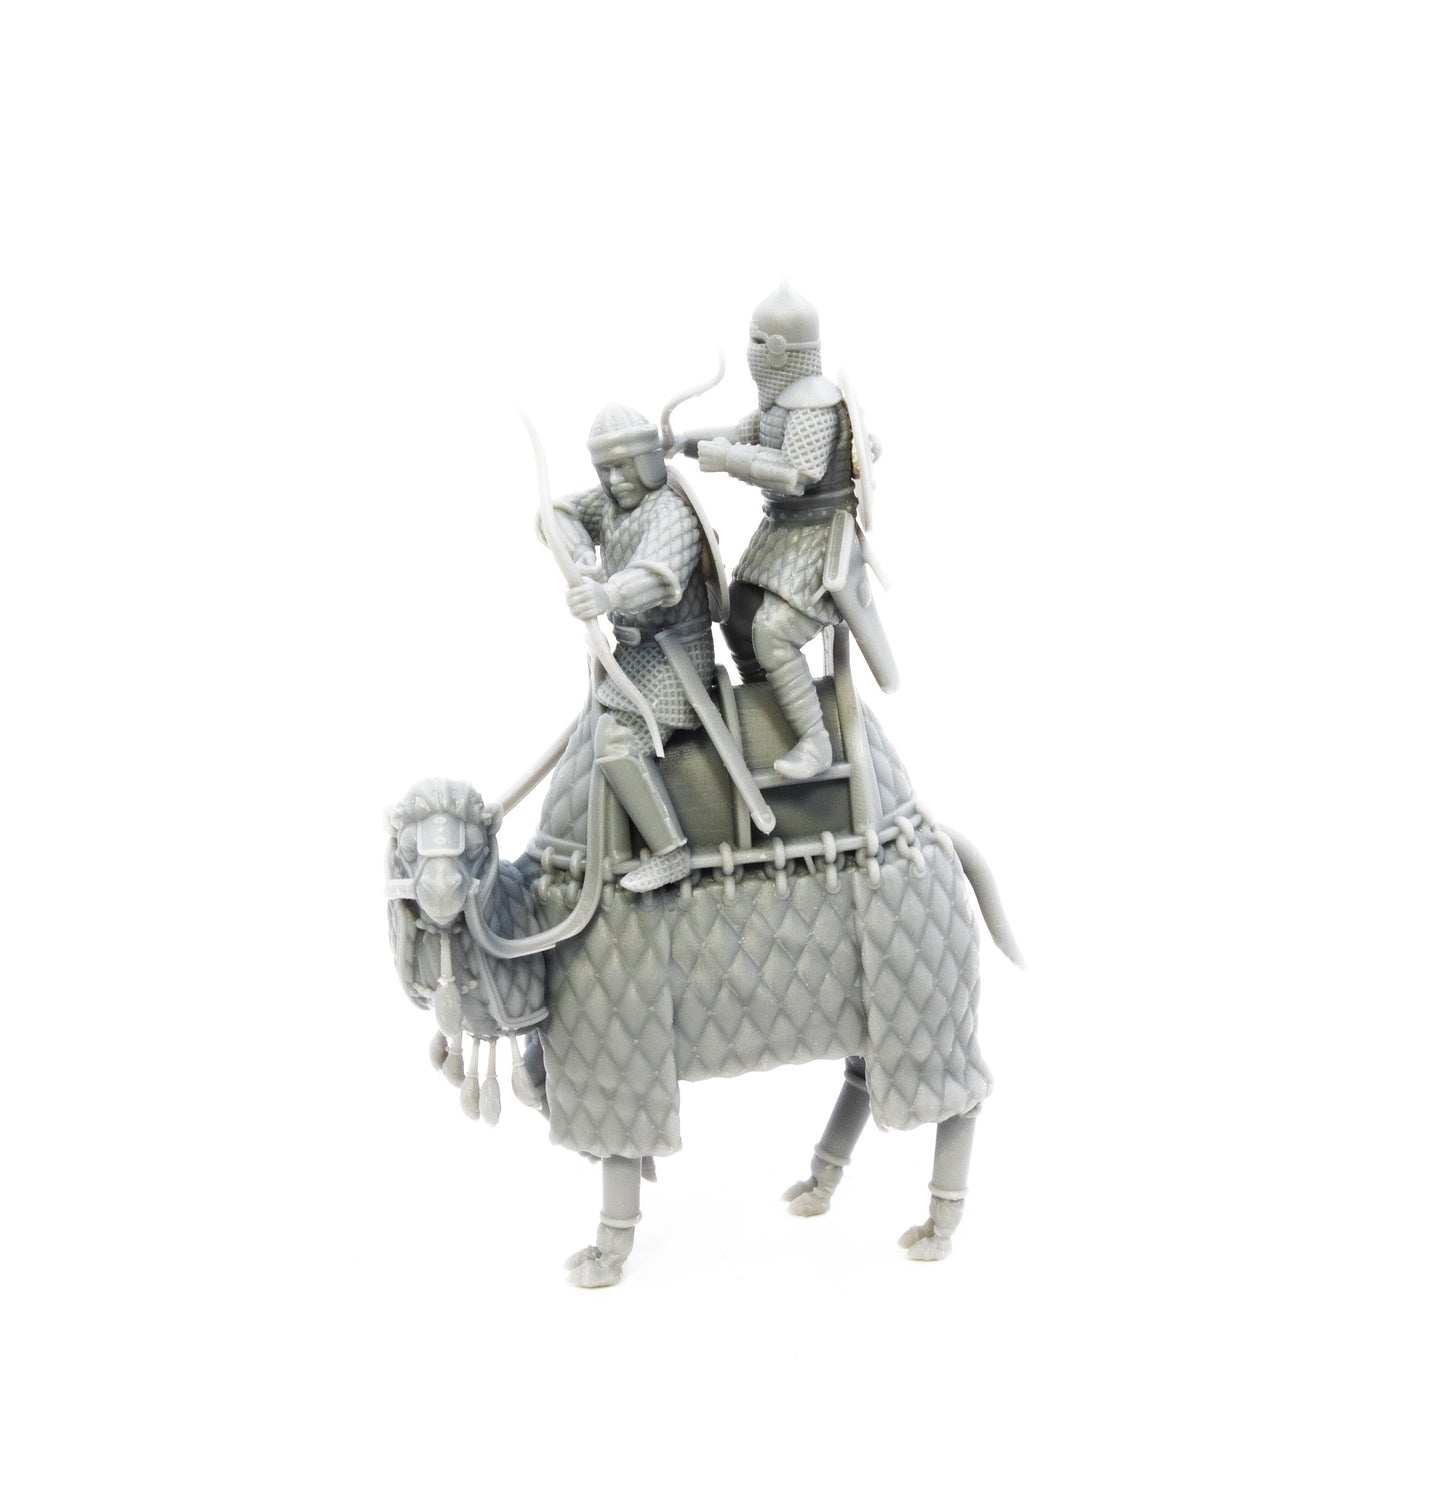 Mongol Golden Horde - Auxiliary Camel Warriors #2 December set.